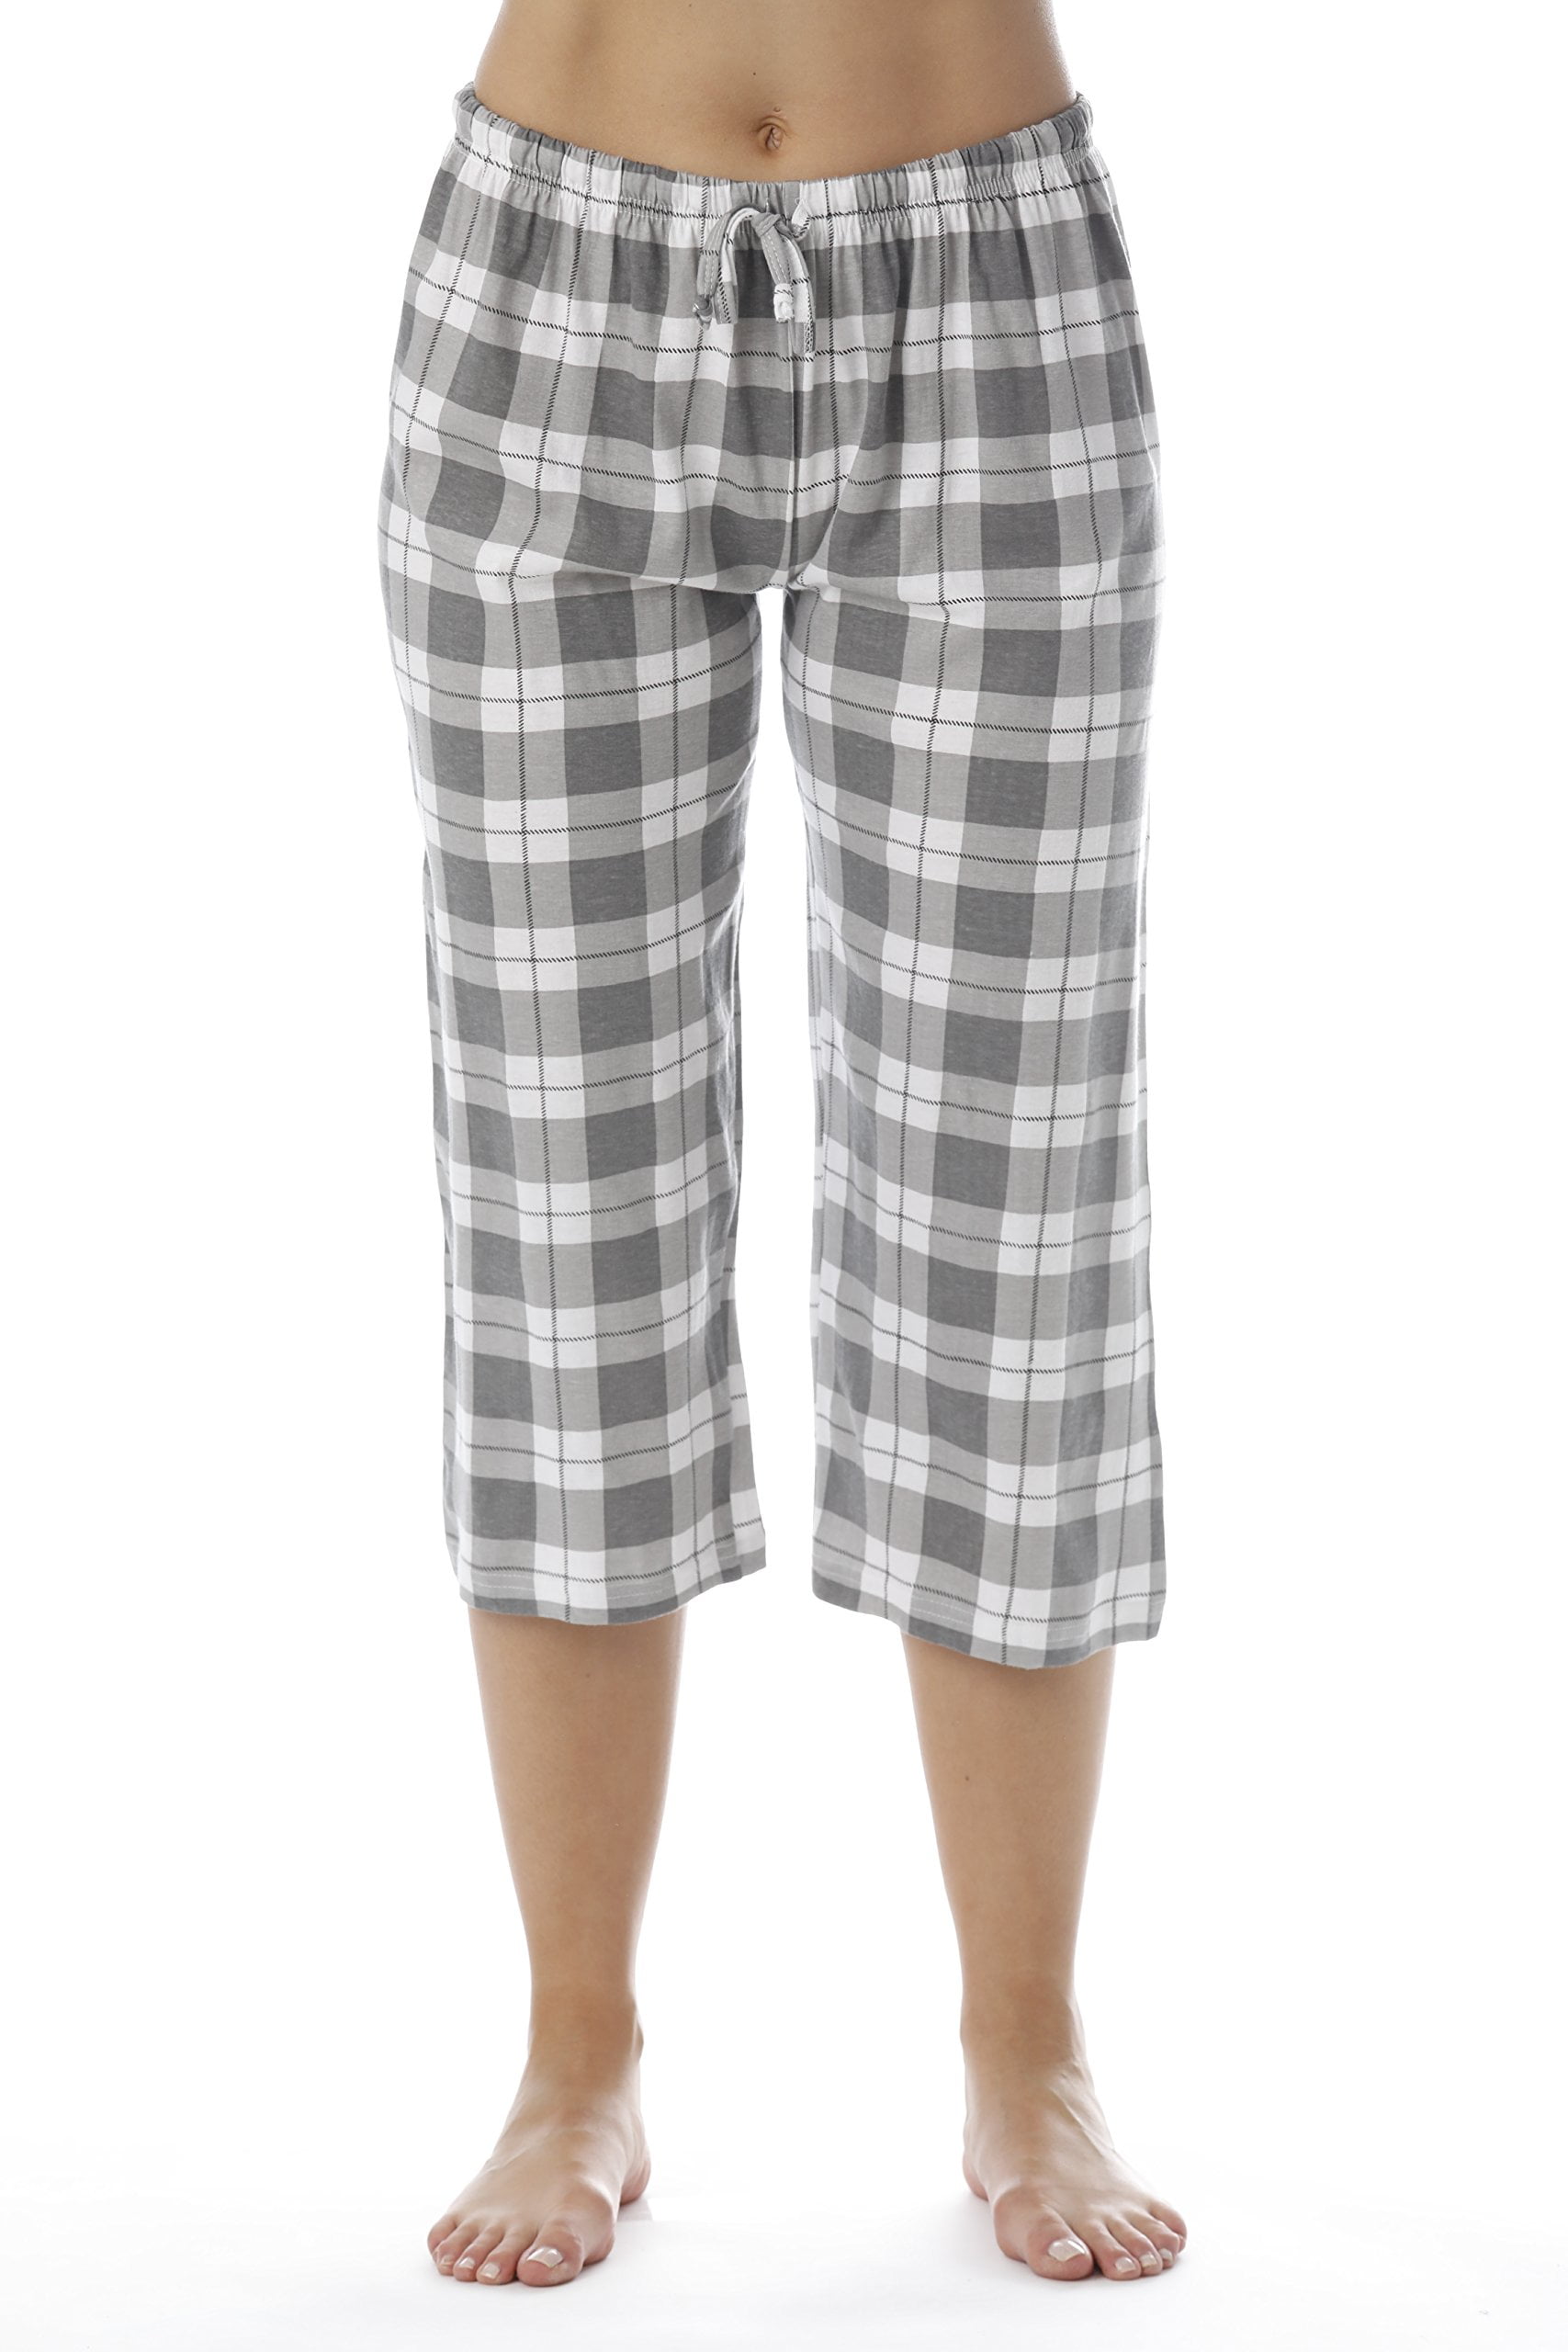 Just Love 100% Cotton Women Pajama Capri Pants Sleepwear (Grey, Small)